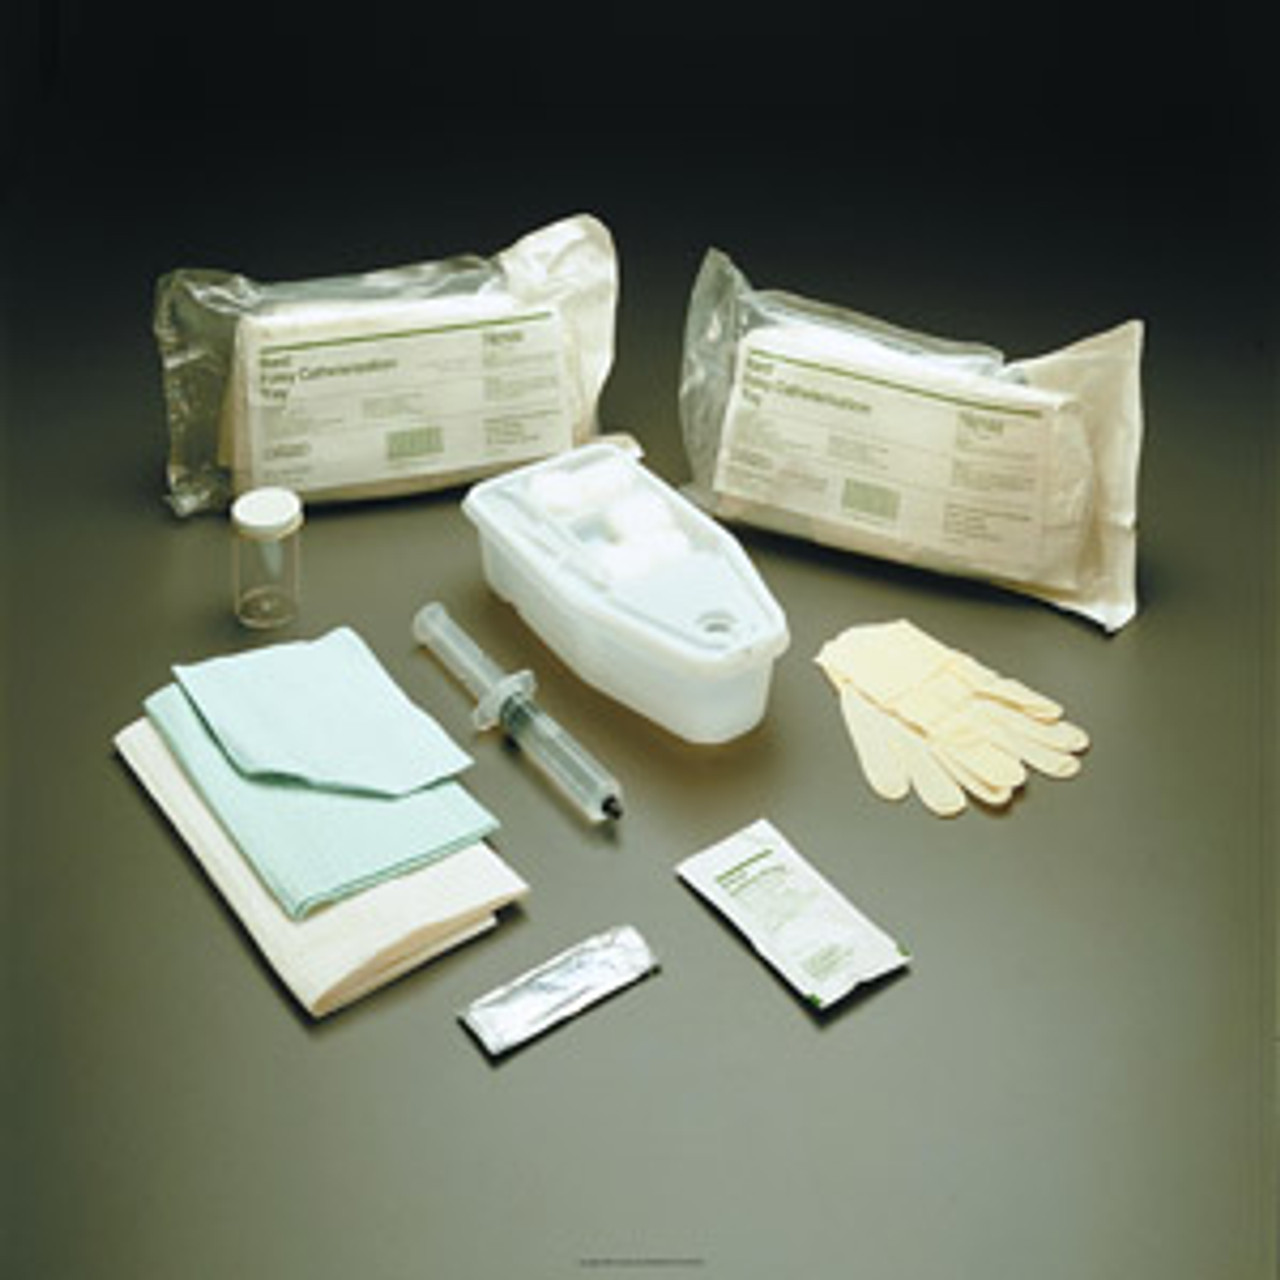 Foley Catheter Universal Insertion Tray - Sterile BRD782100EA